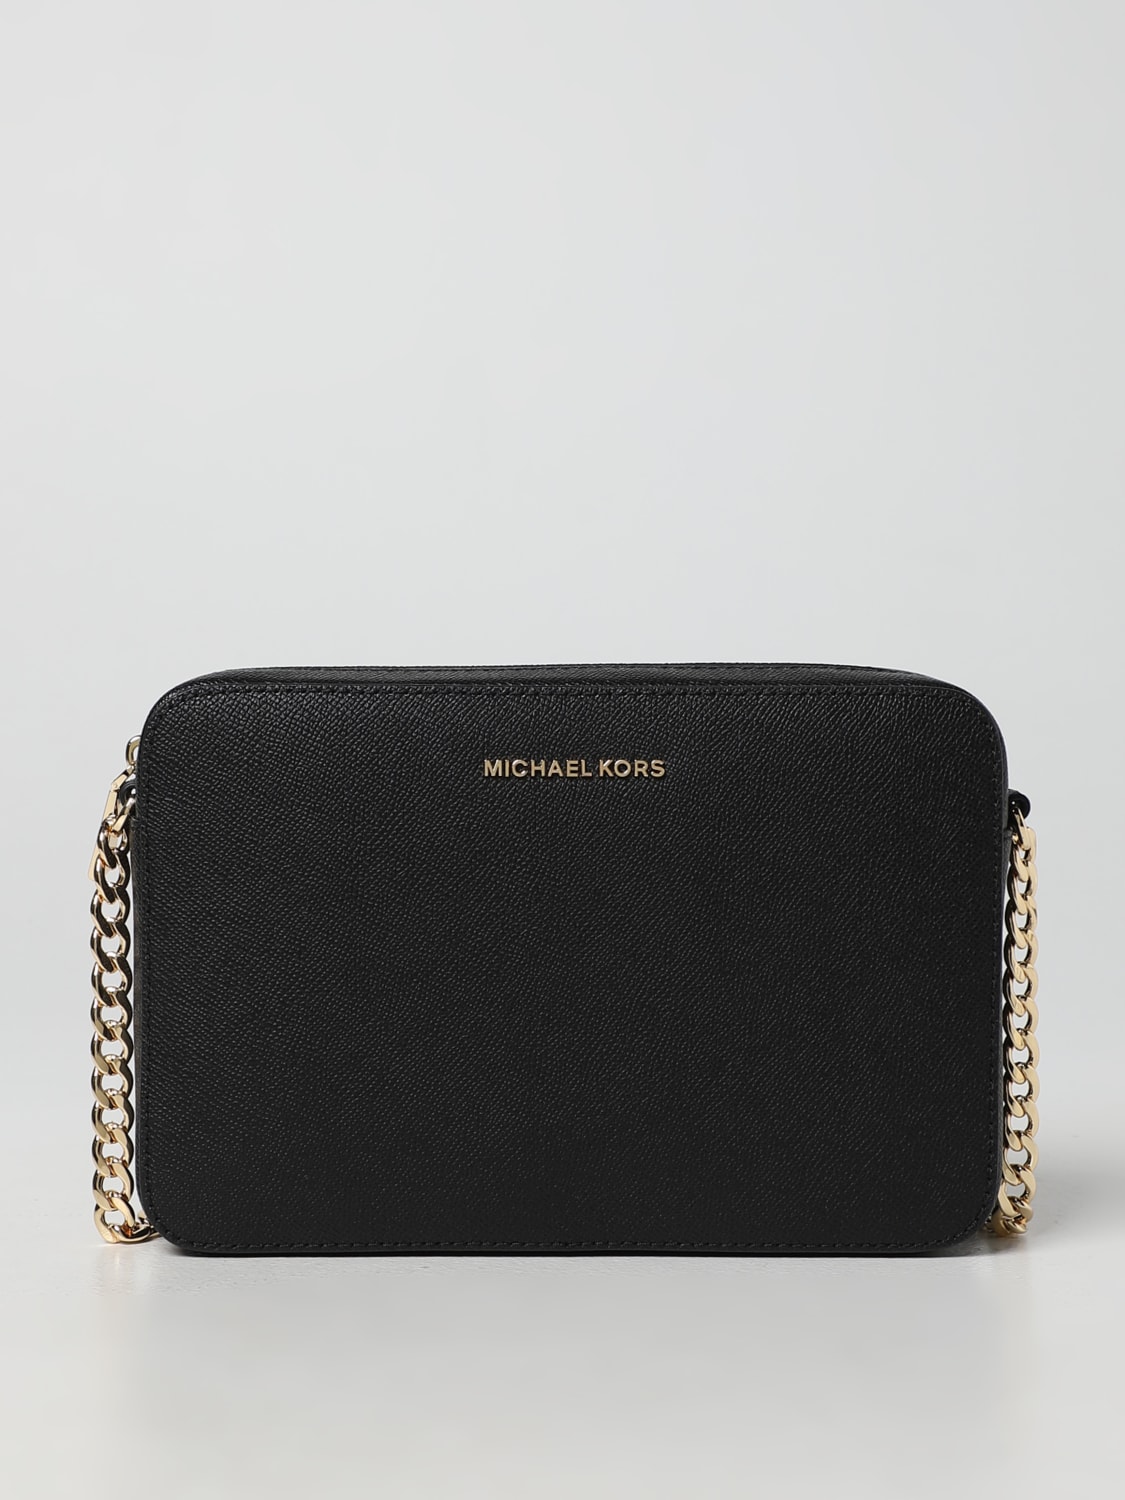 Michael Kors Outlet: Michael bag in leather - Black